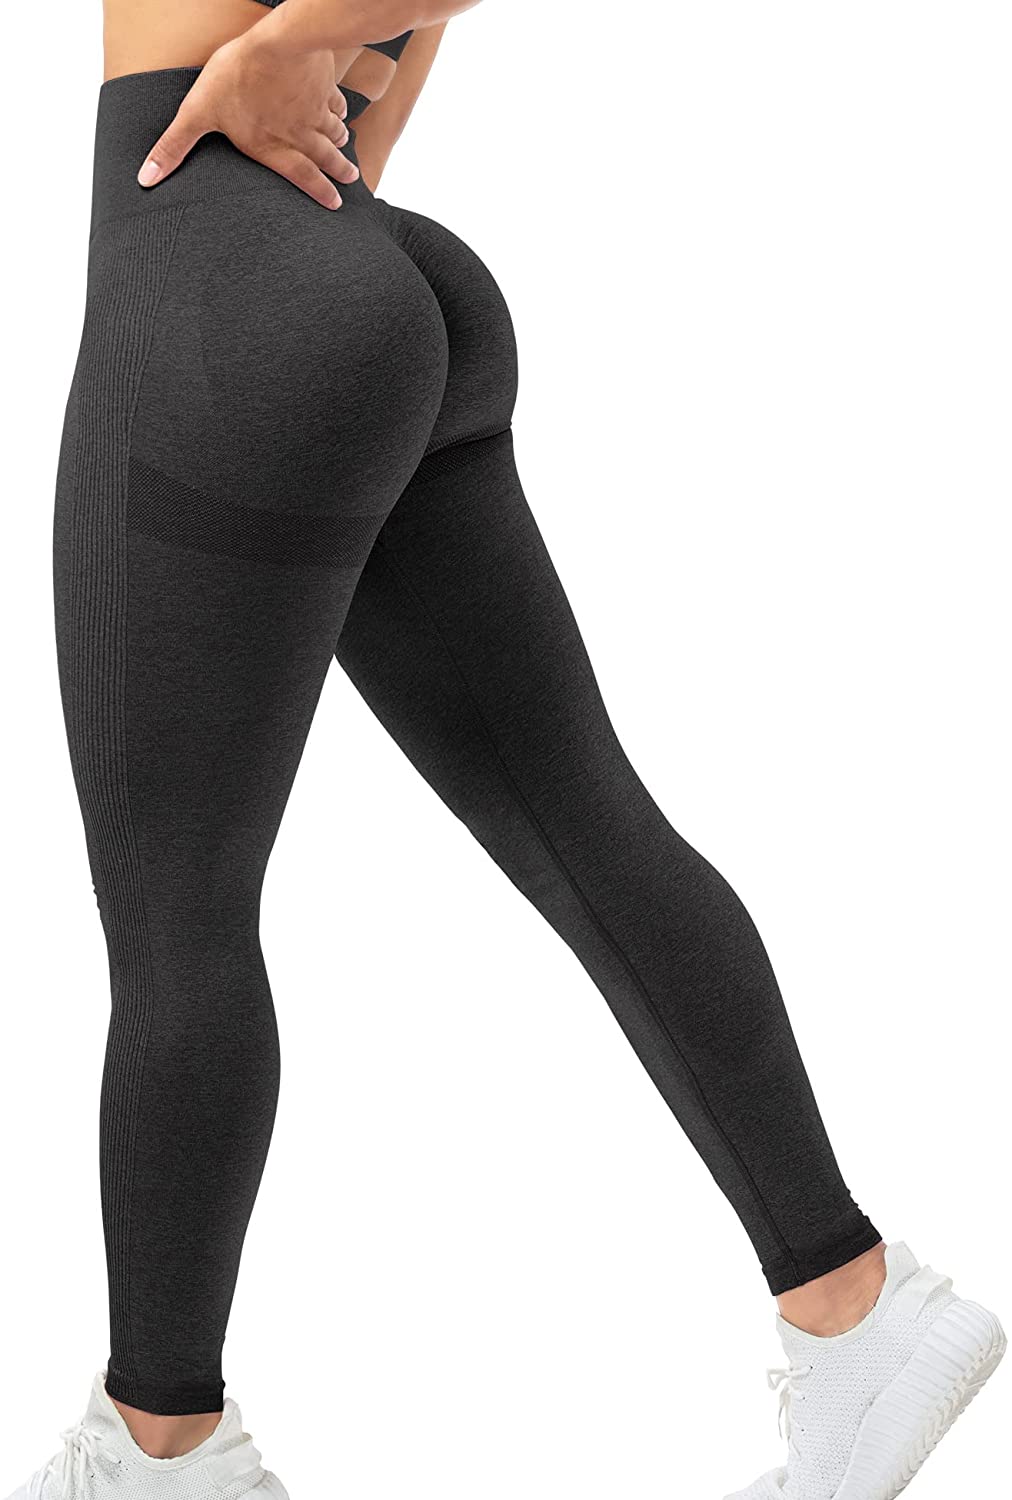 Women's Squat Proof Leggings - KIQO Gym Wear